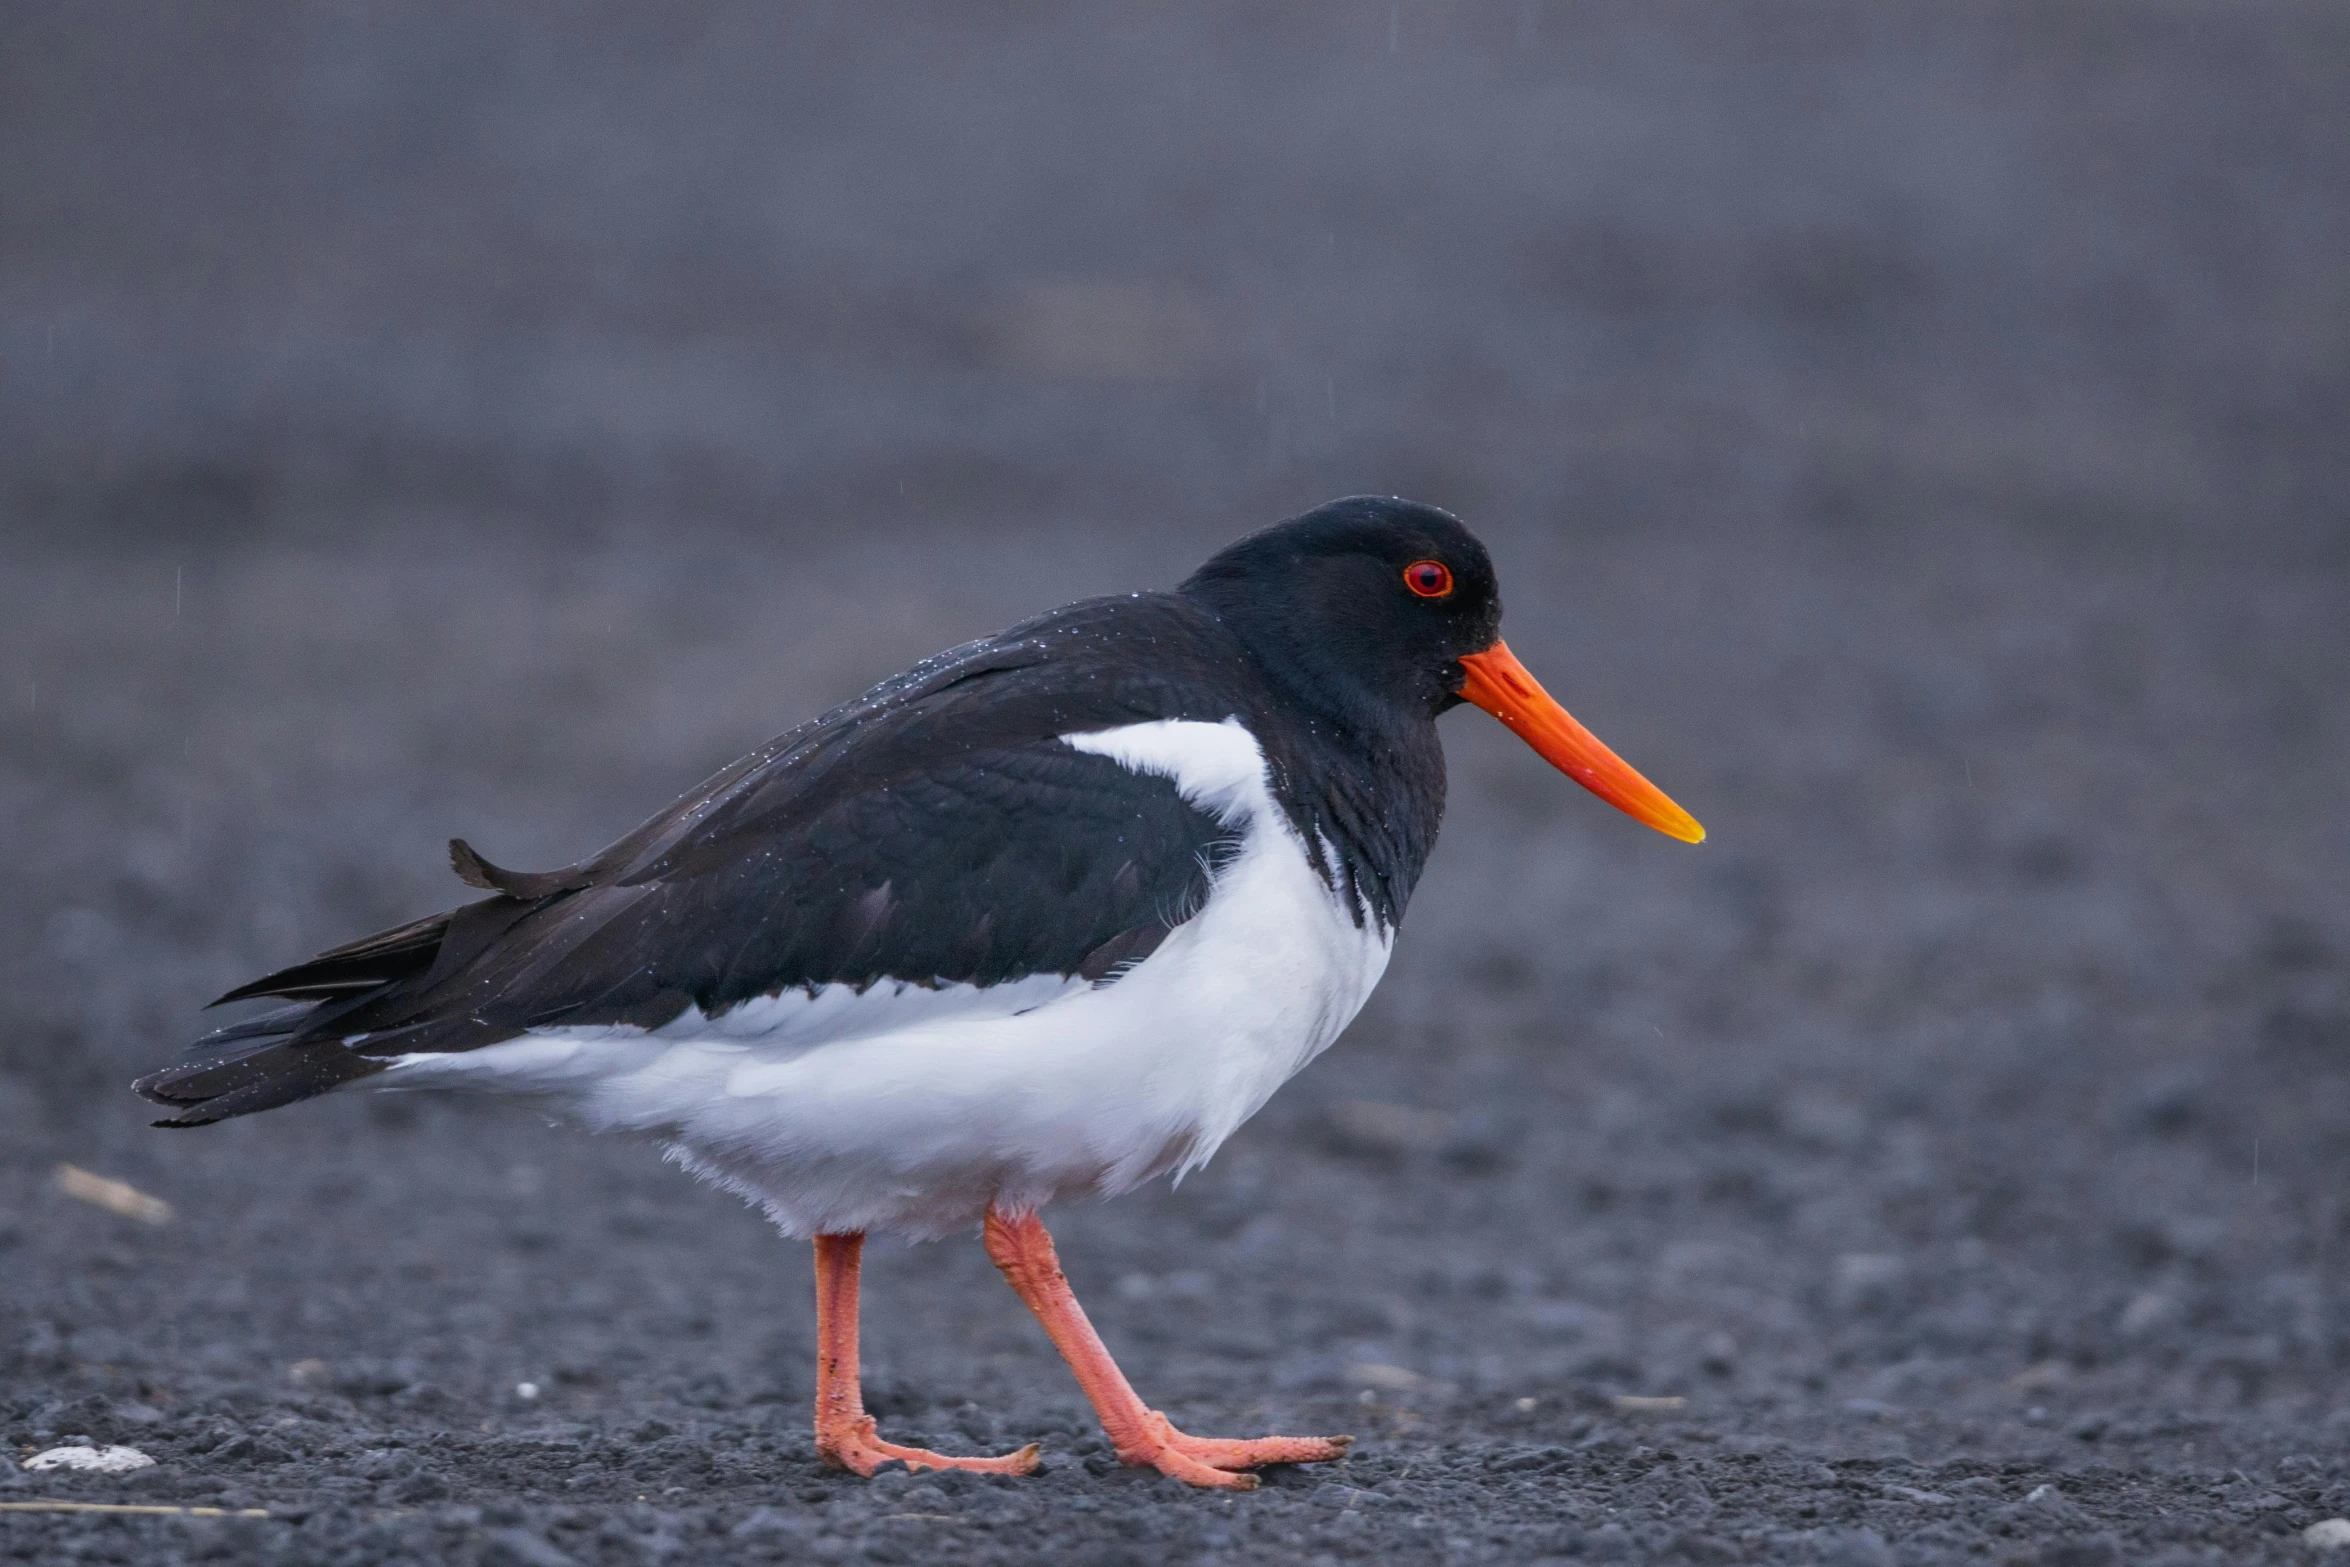 a bird with an orange beak is on the ground